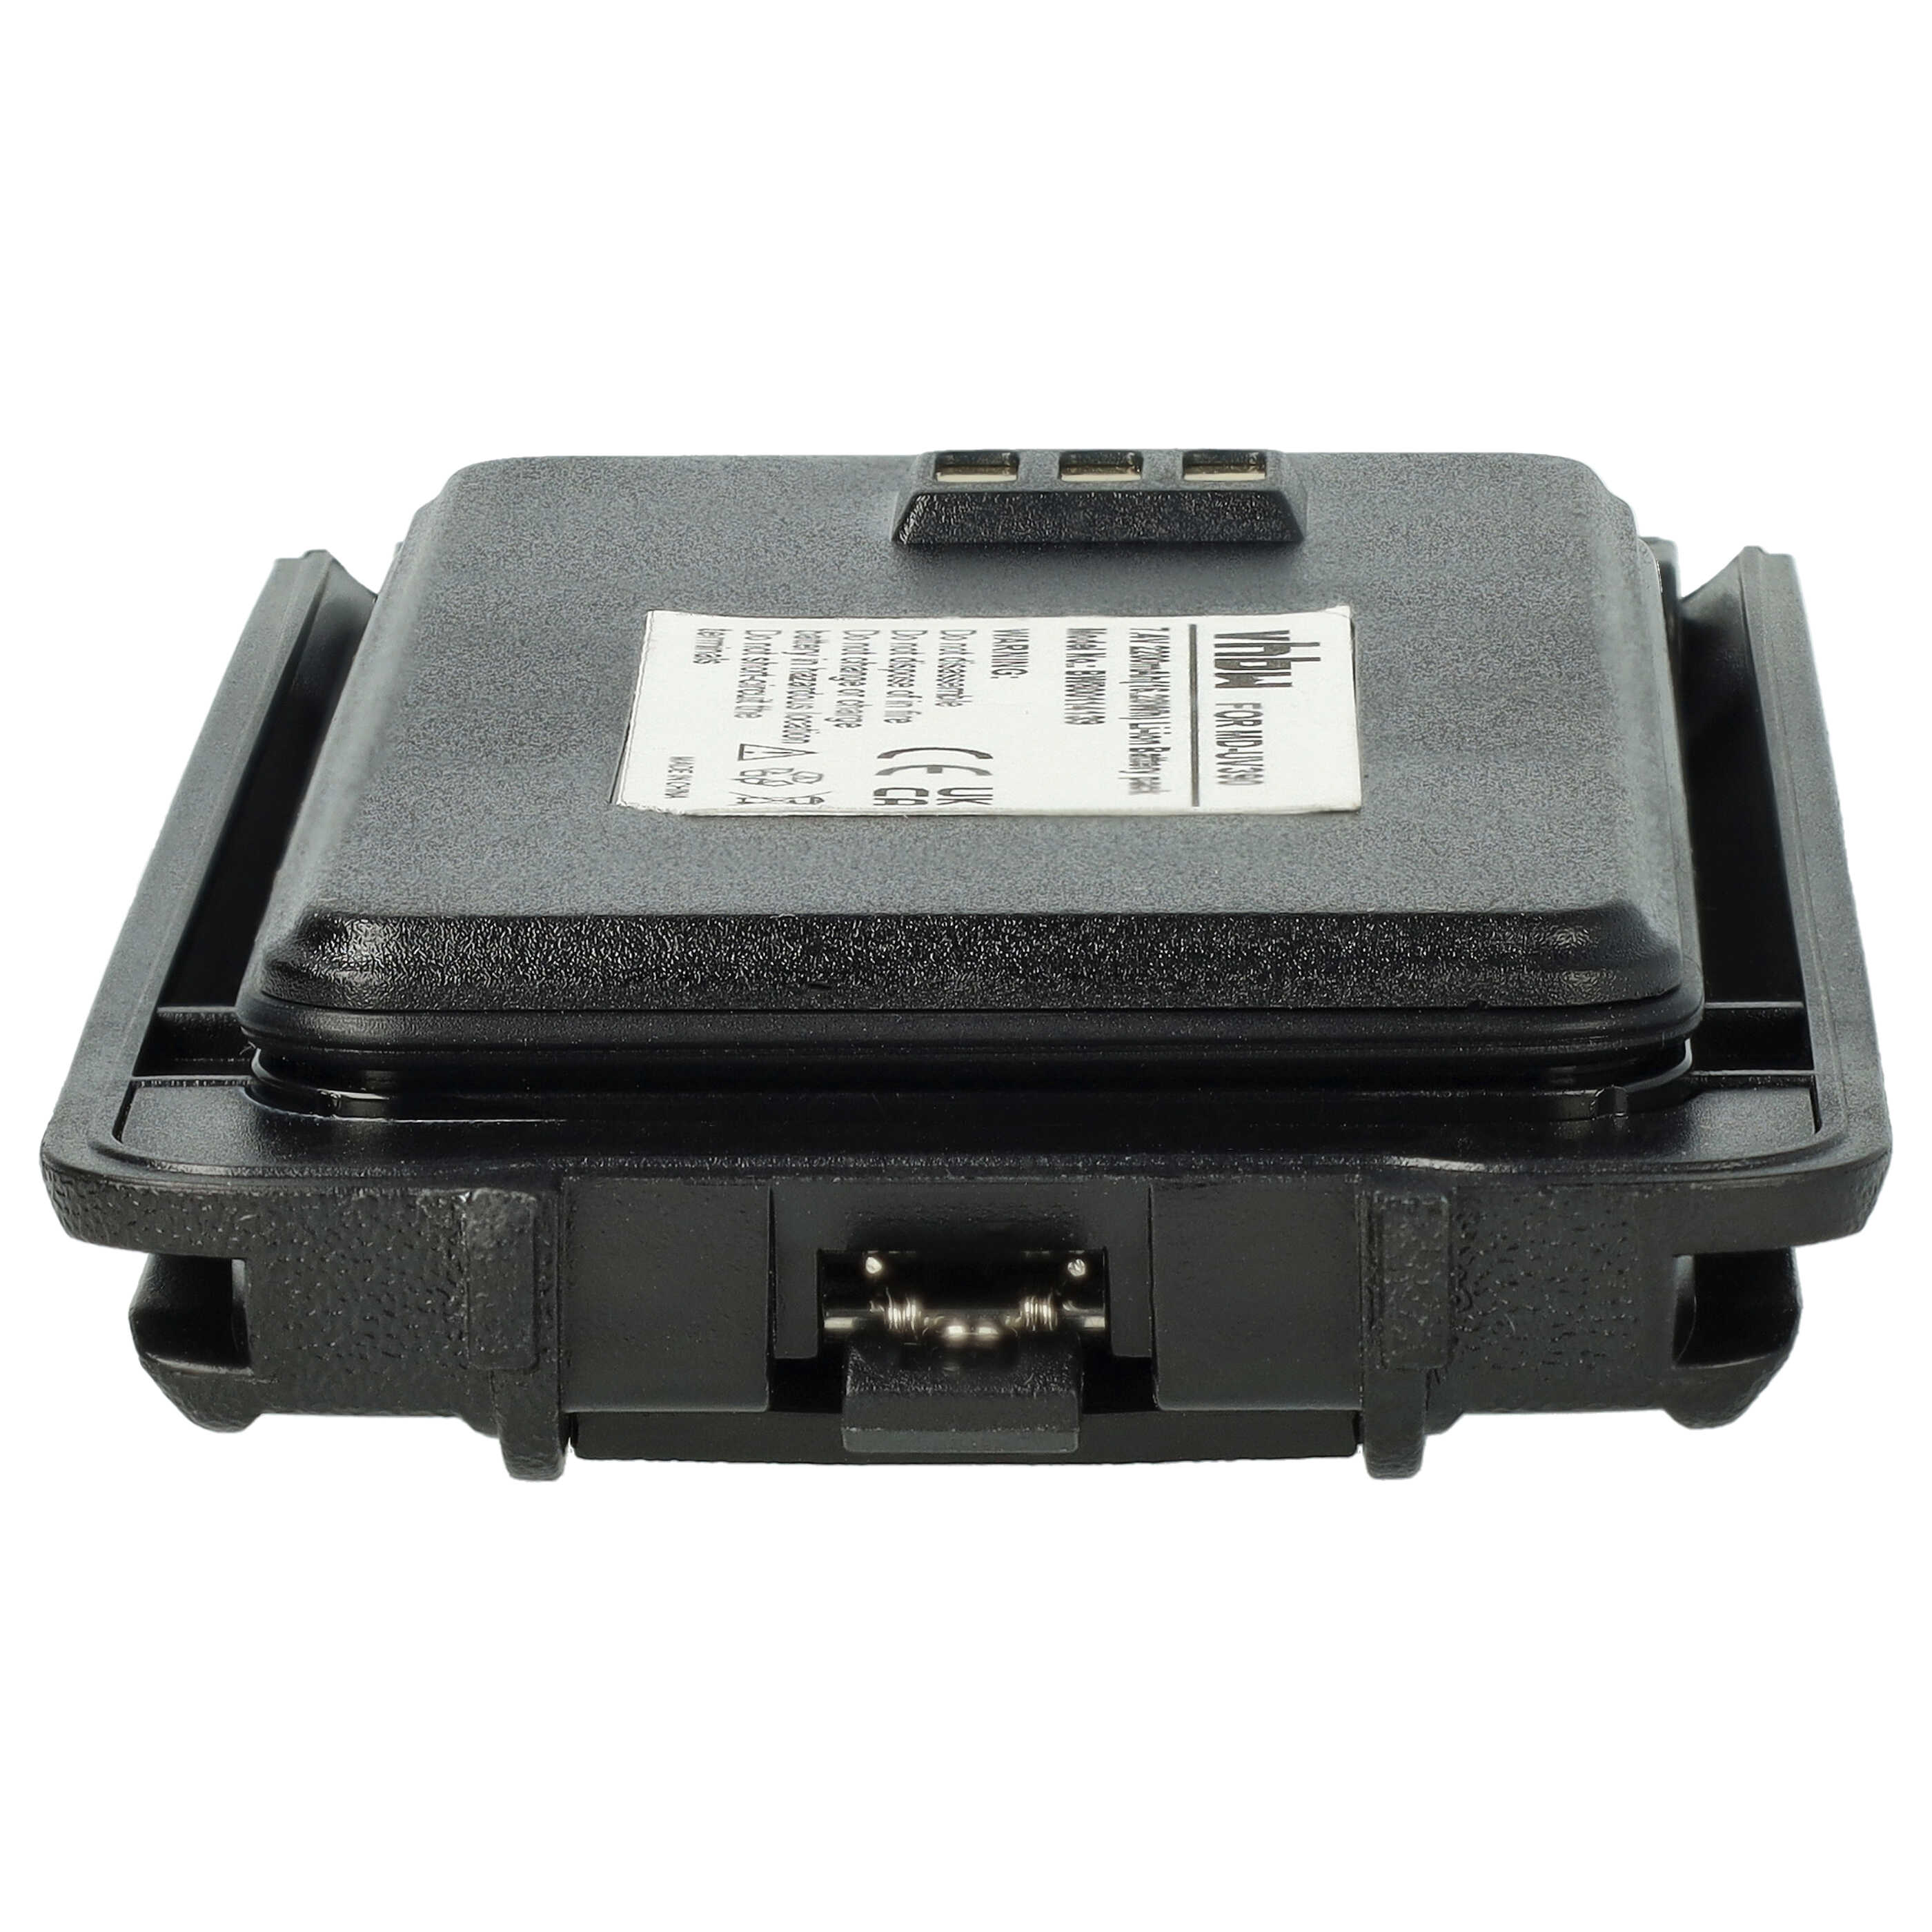 Batterie remplace Harico BL50 pour radio talkie-walkie - 2200mAh 7,4V Li-ion